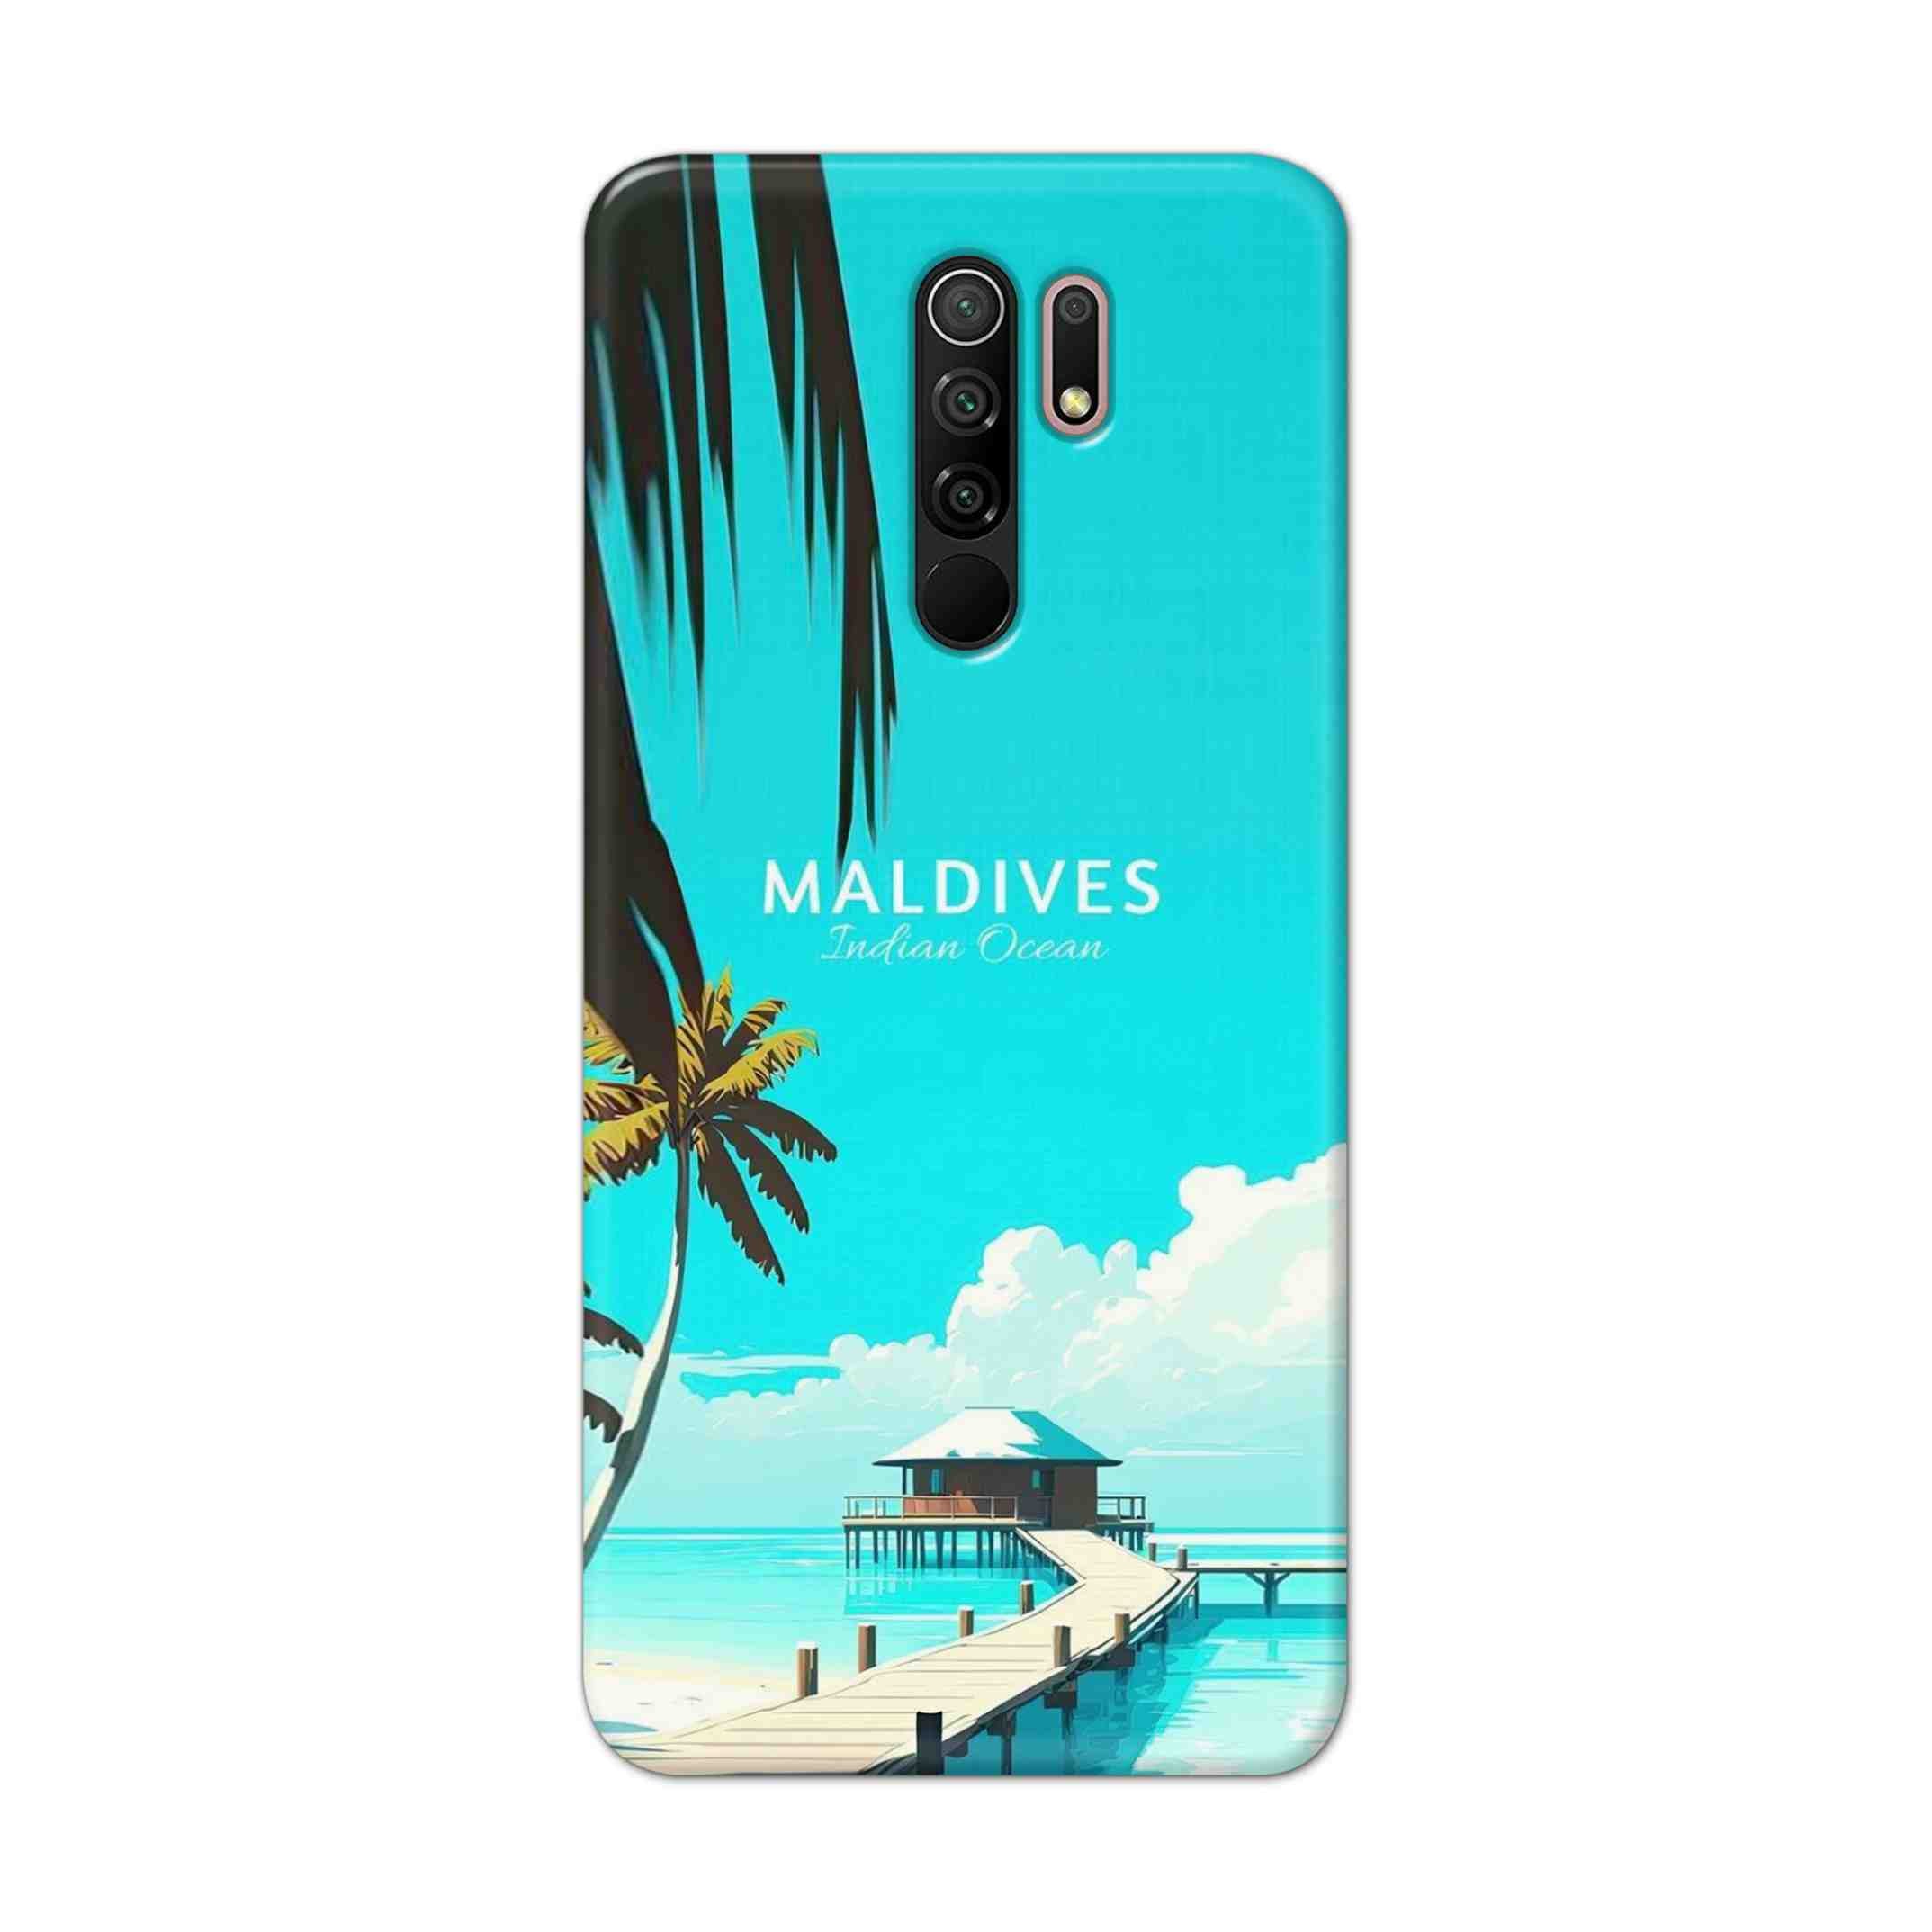 Buy Maldives Hard Back Mobile Phone Case Cover For Xiaomi Redmi 9 Prime Online